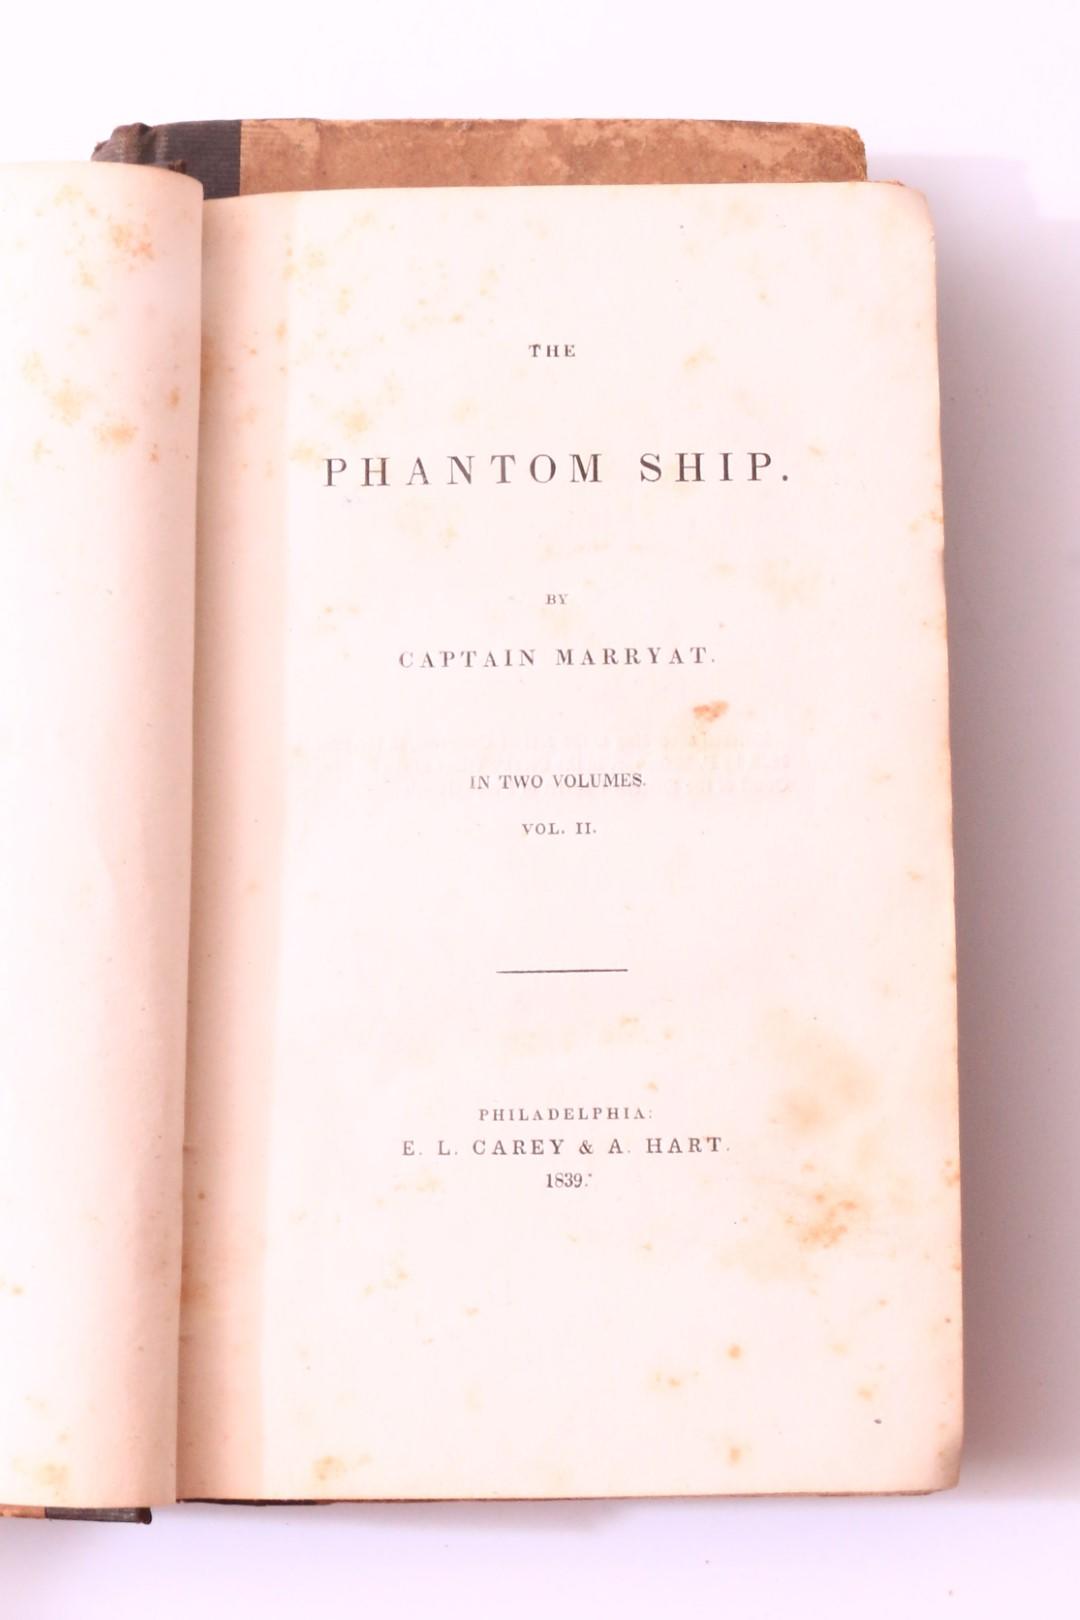 Captain [Frederick] Marryat - The Phantom Ship - E.L. Carey & A. Hart, 1839, First Edition.